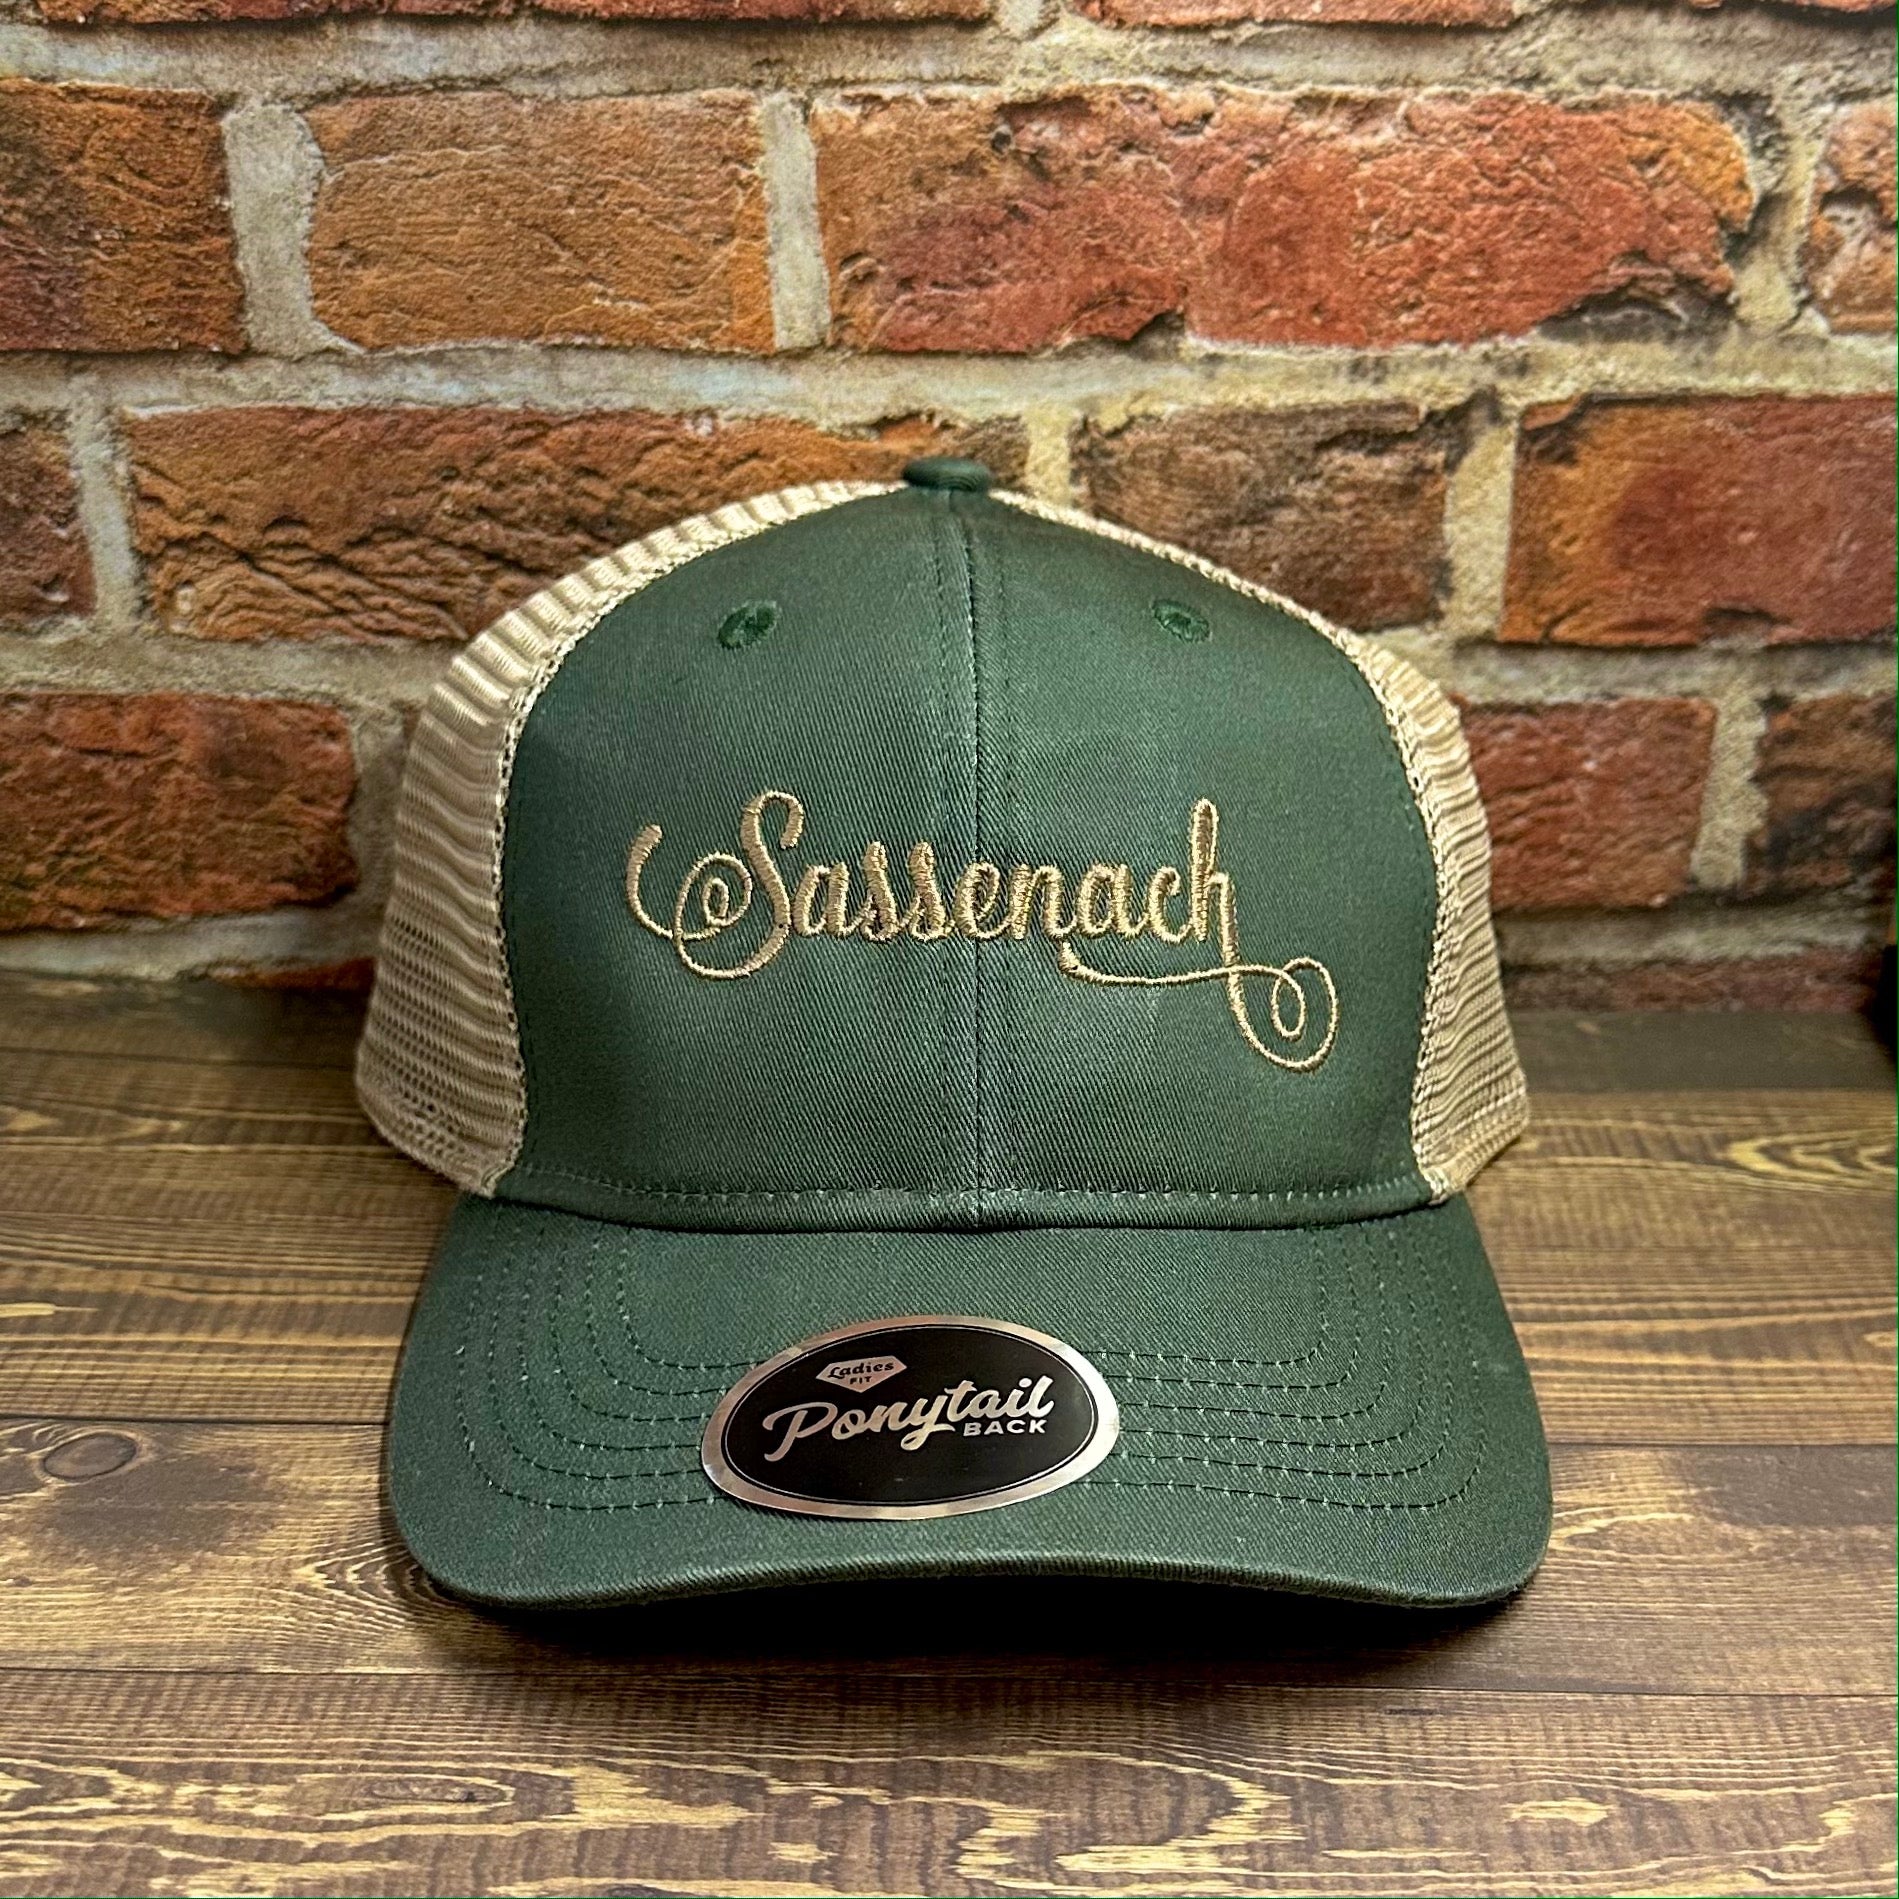 Sassenach Embroidered Hat - Outlander Inspiration